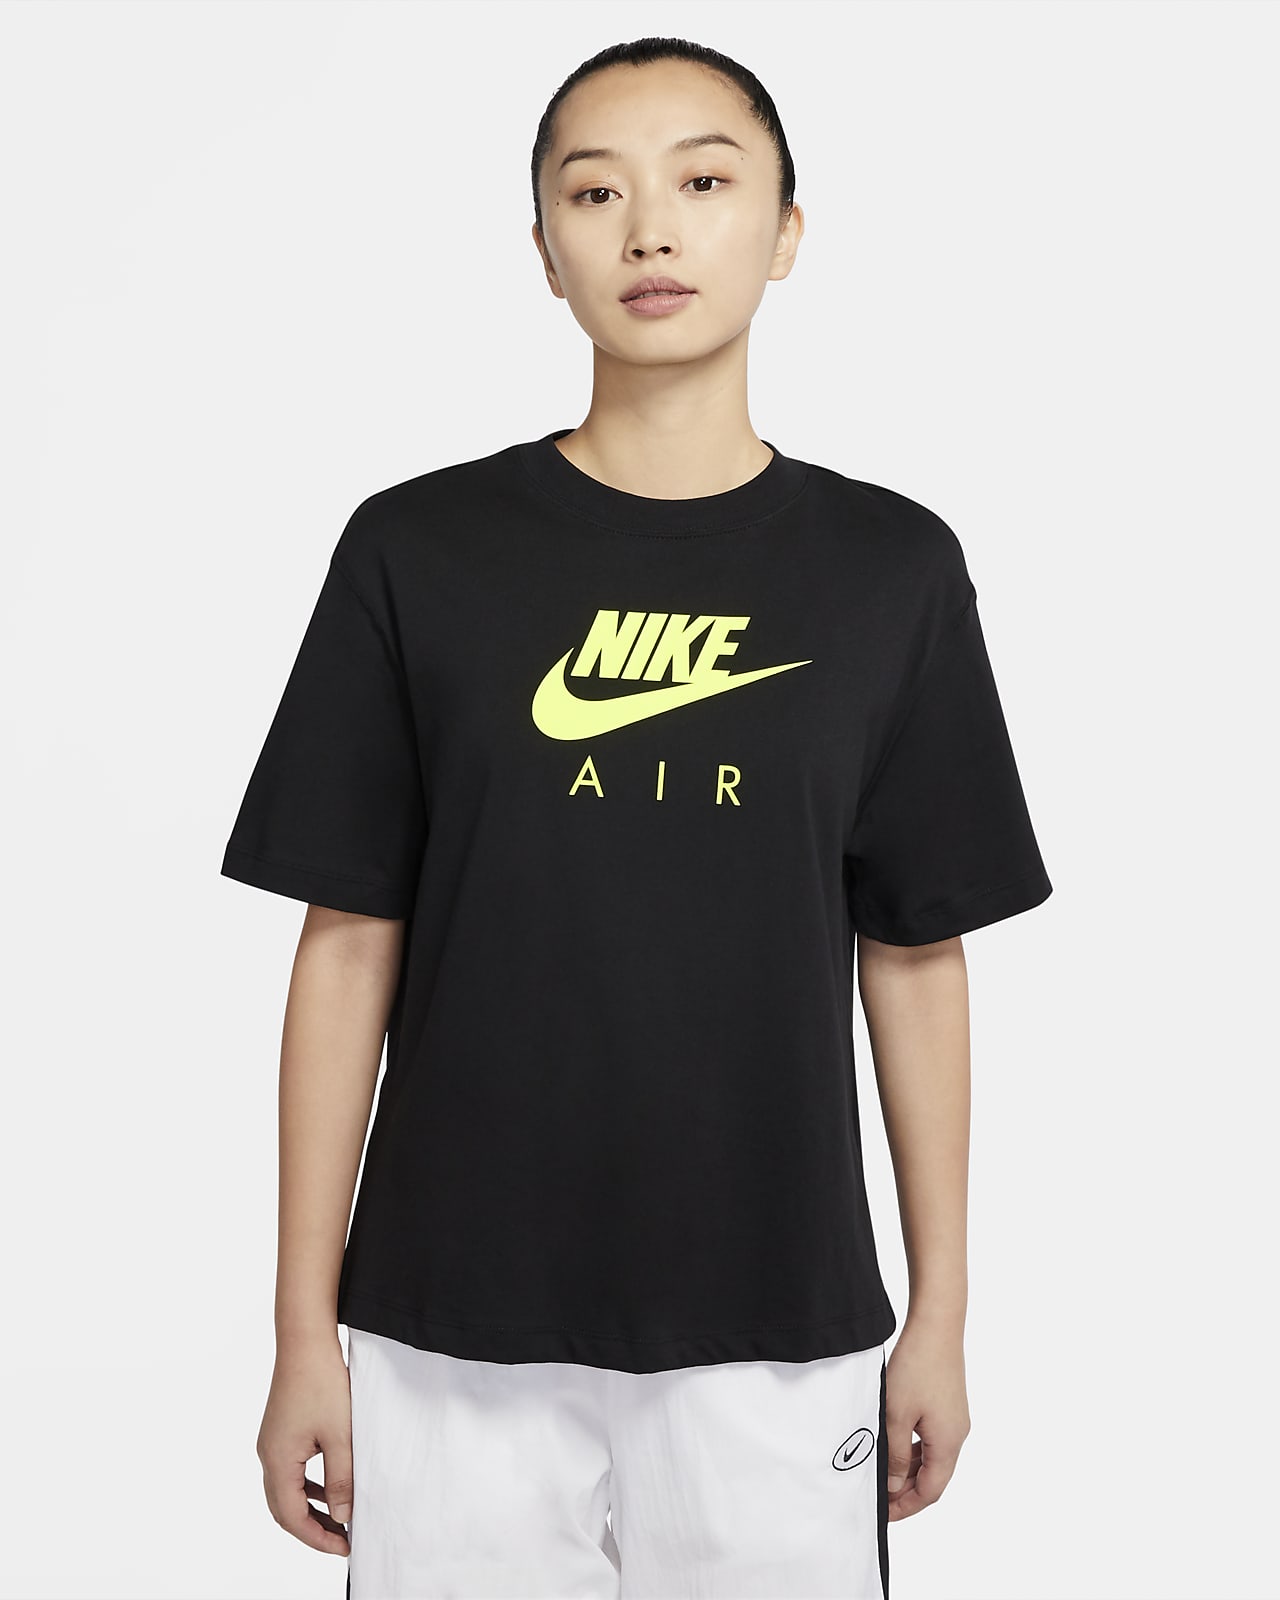 Nike Air Women's Short-Sleeve Top